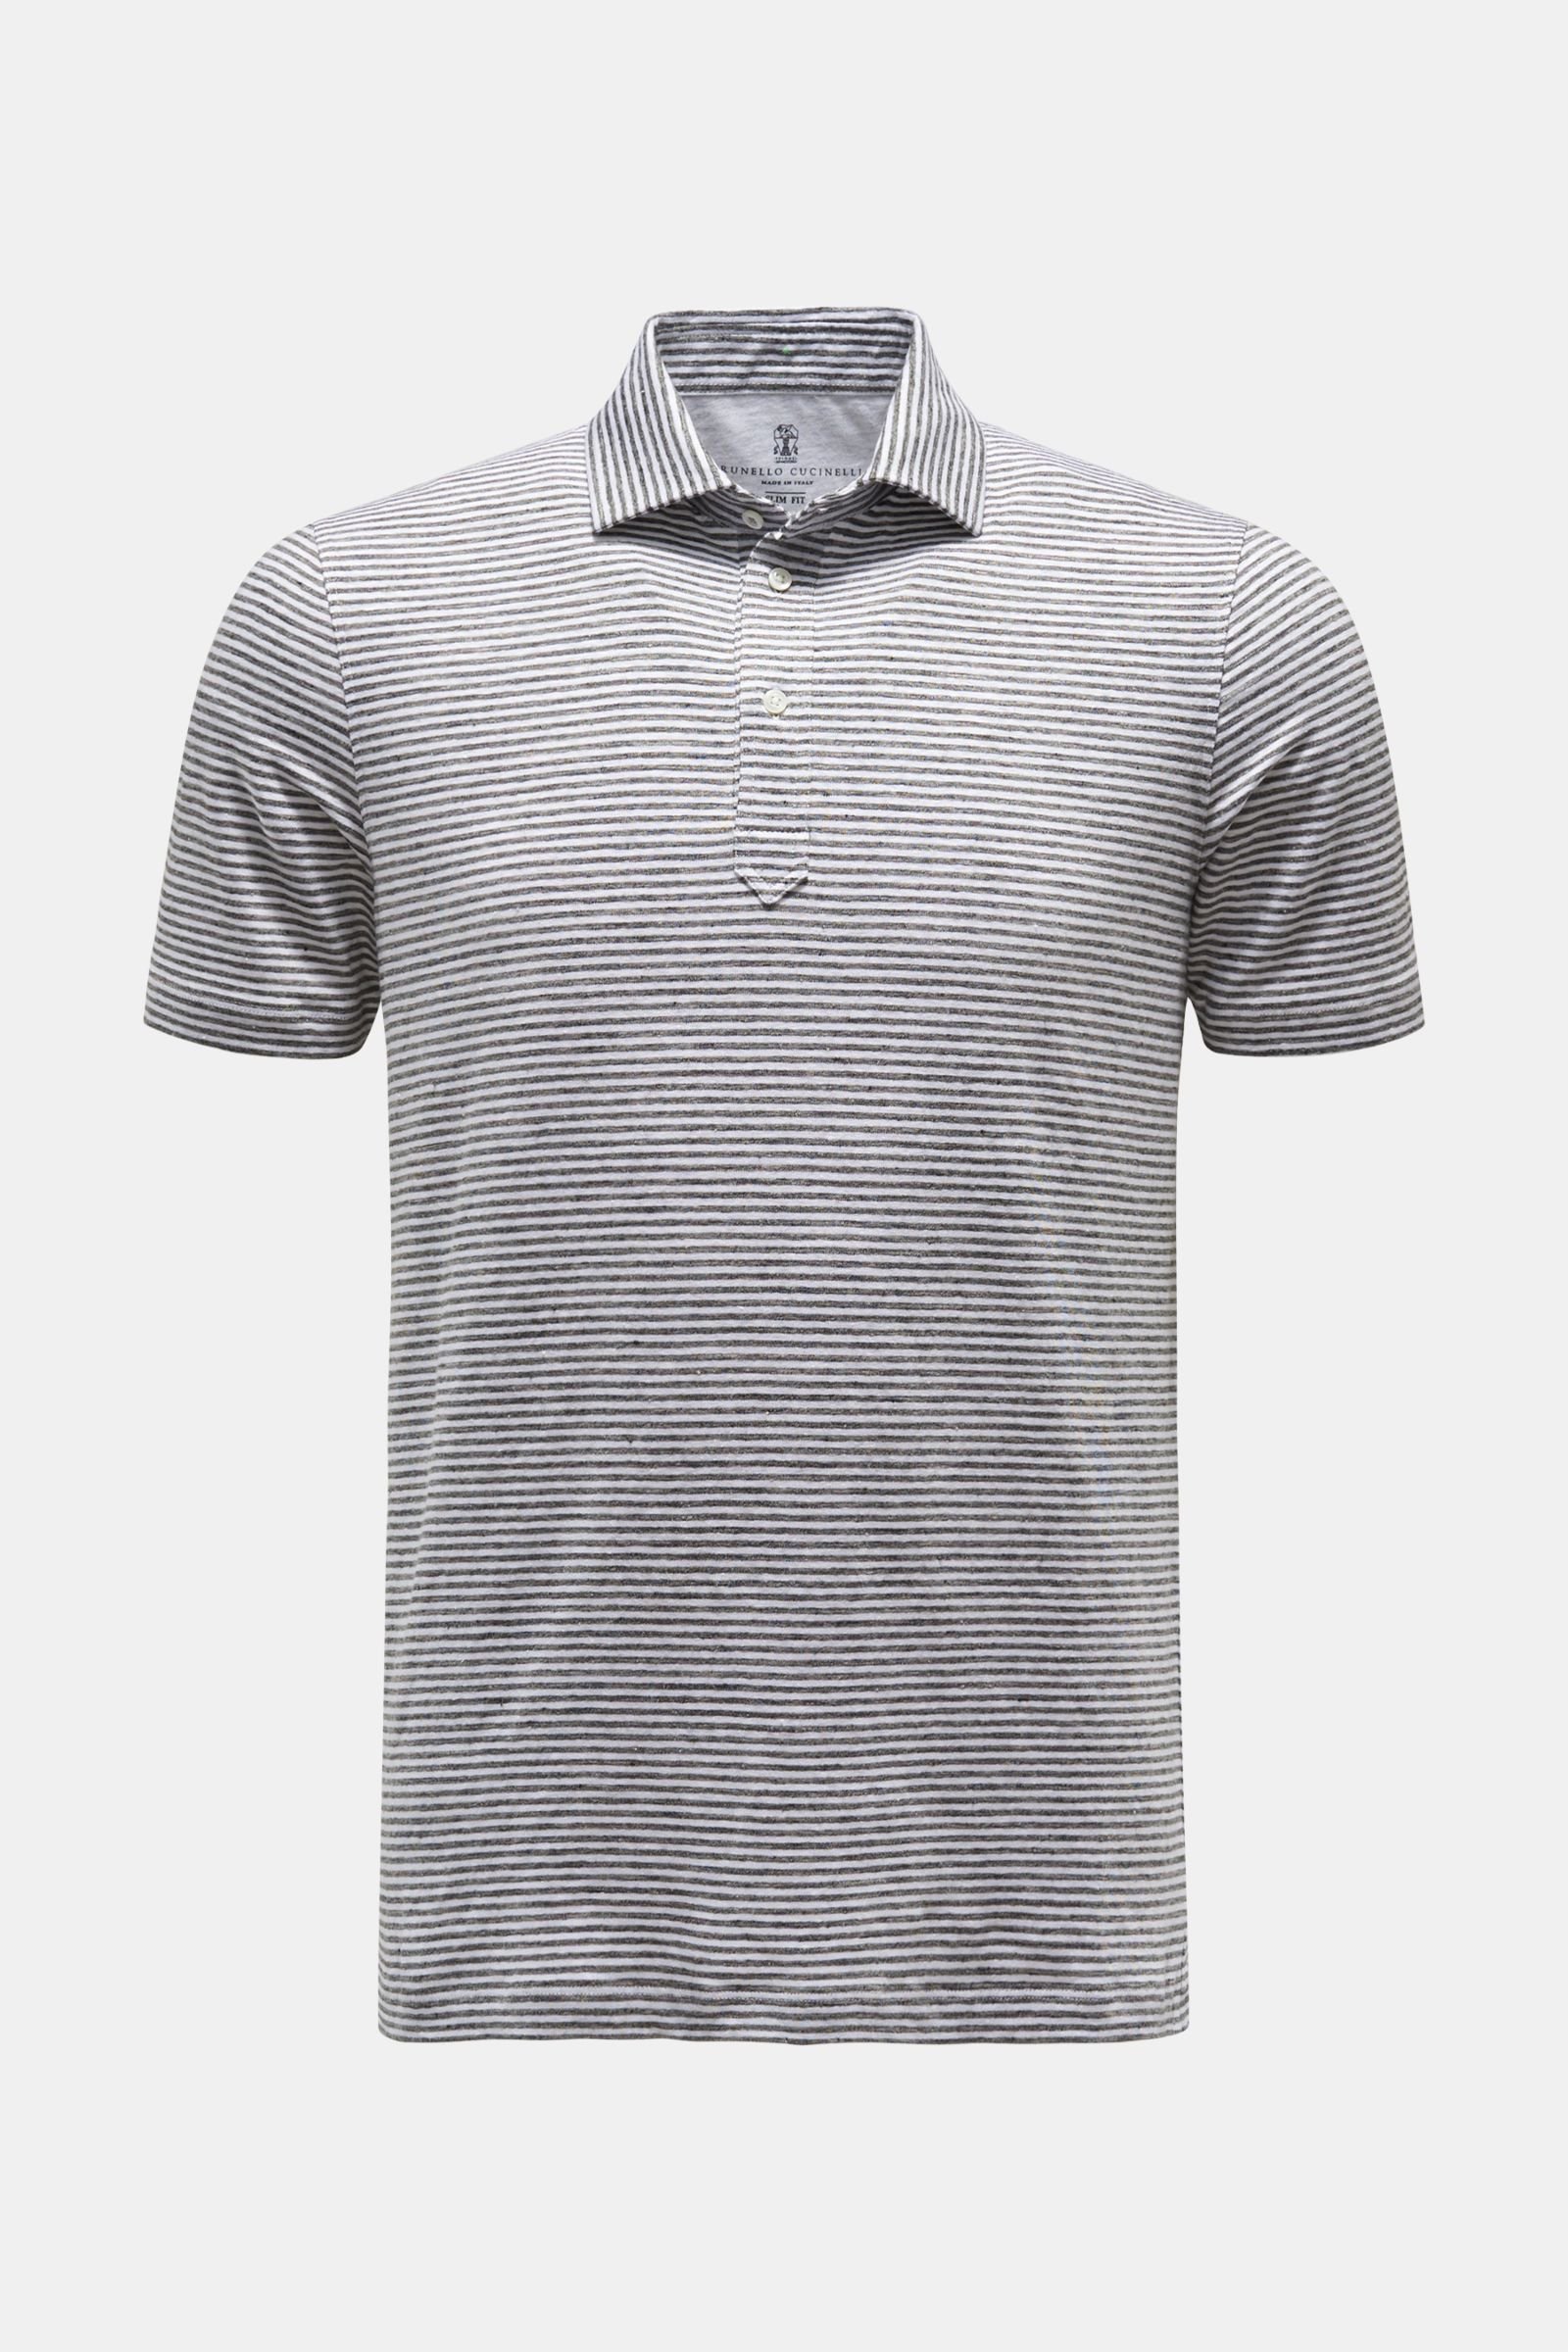 Linen polo shirt dark grey/white striped